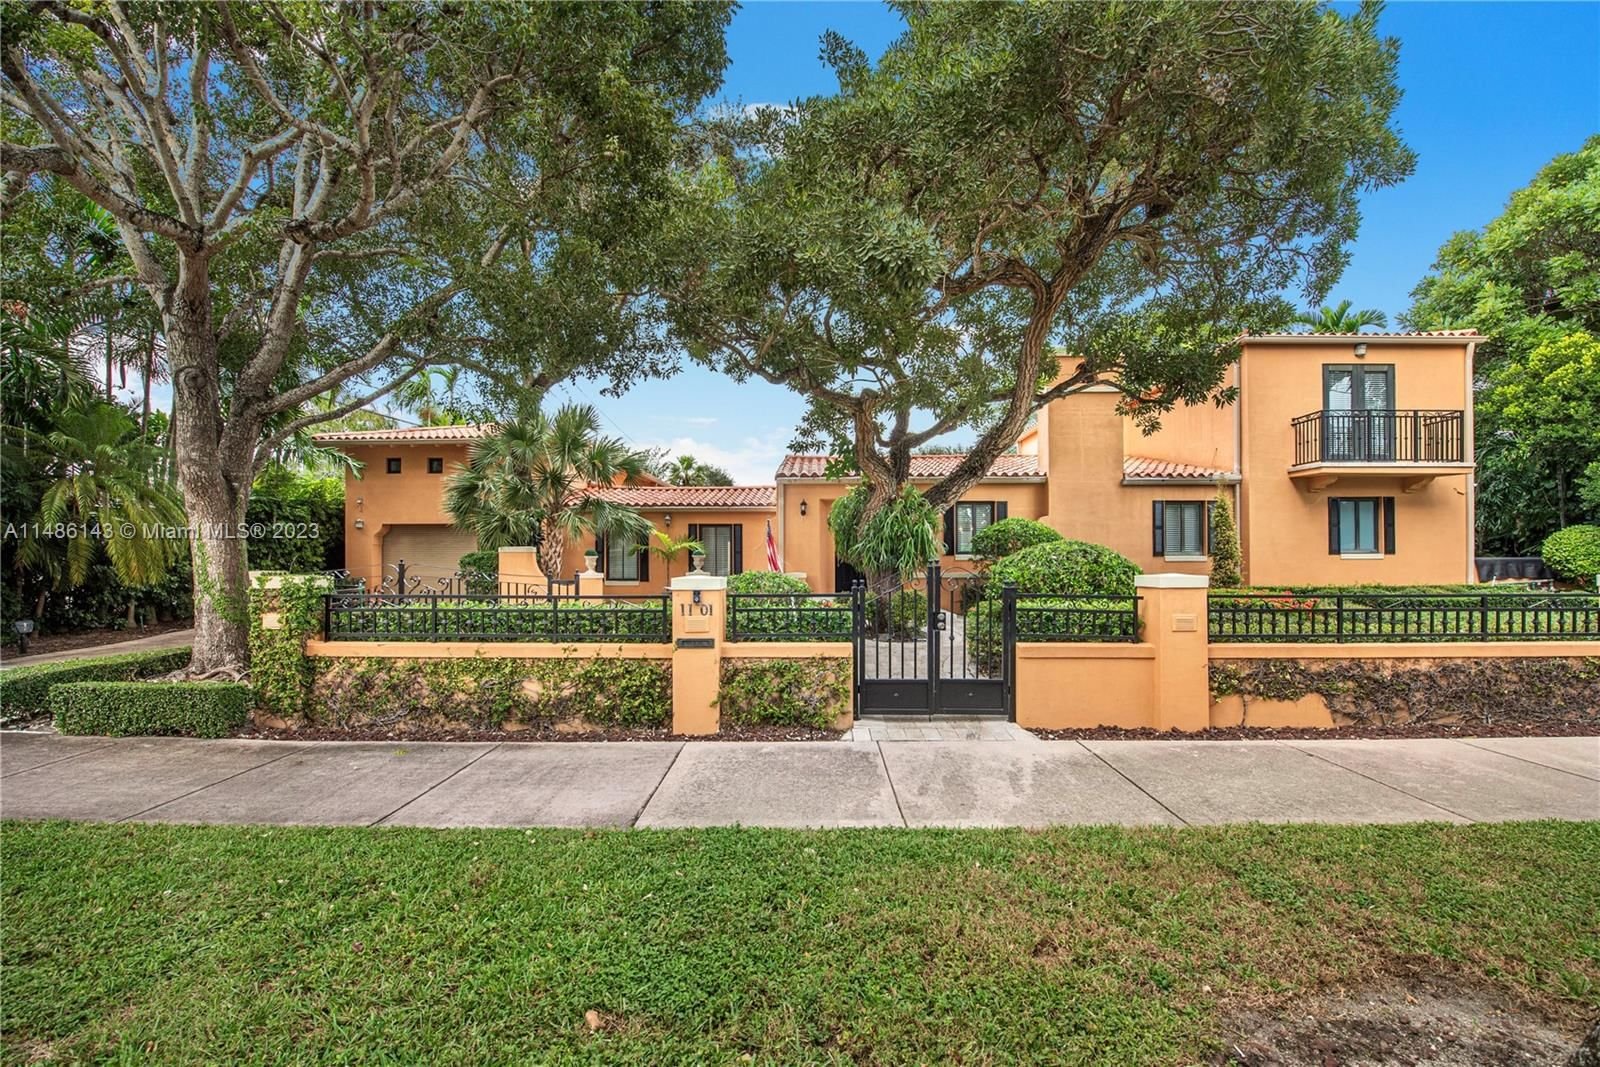 Real estate property located at 1101 Alhambra Cir, Miami-Dade County, CORAL GABLES RIVIERA SEC, Coral Gables, FL